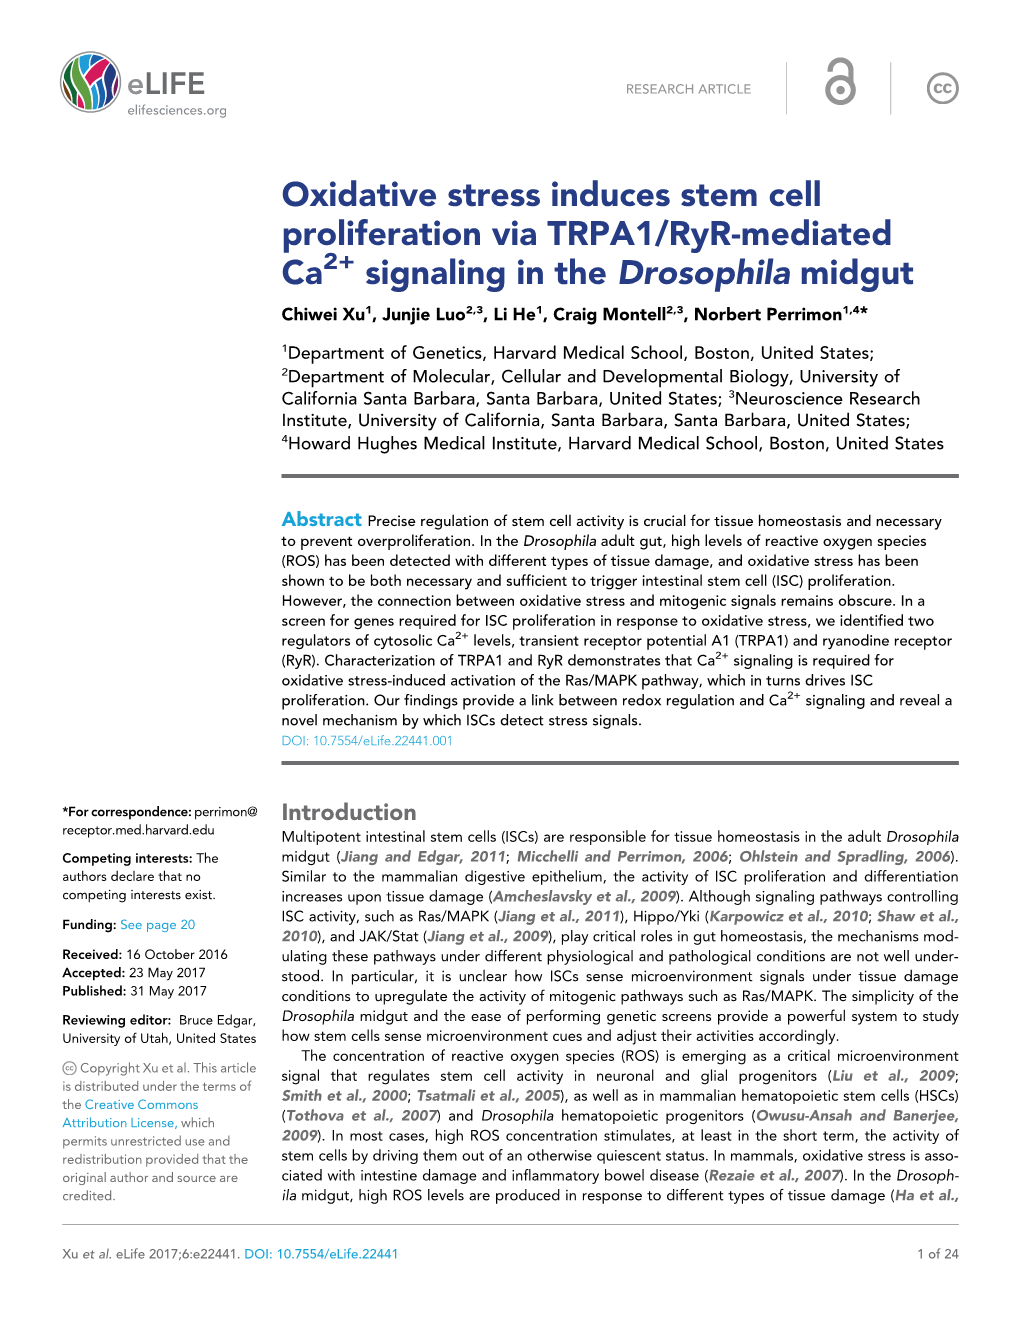 Oxidative Stress Induces Stem Cell Proliferation Via TRPA1/Ryr